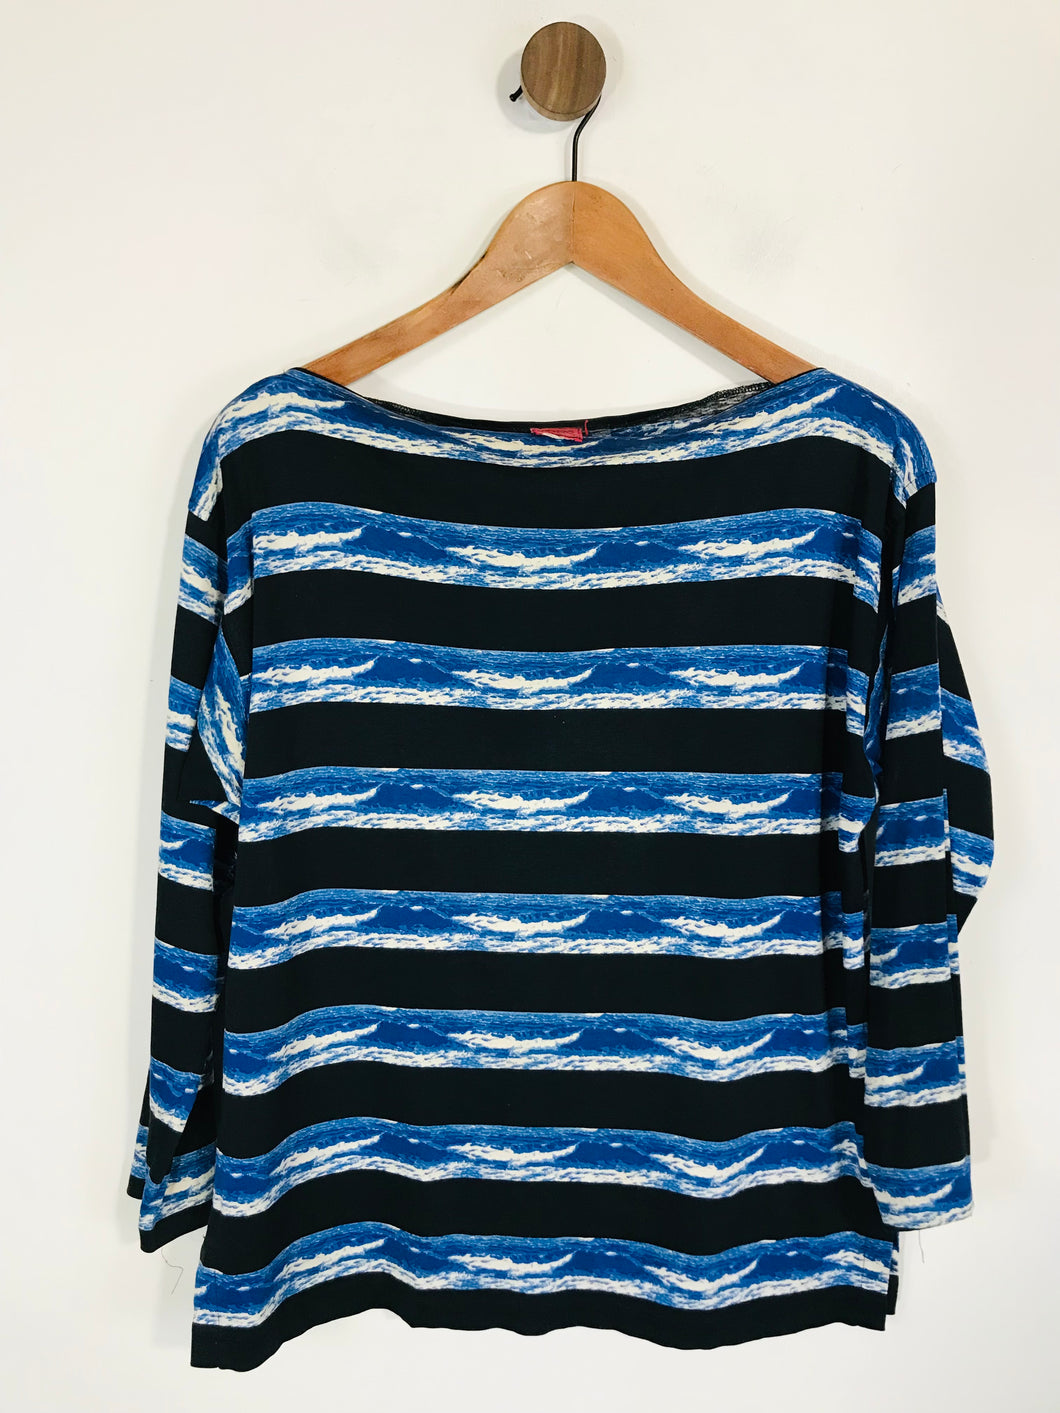 Kenzo Women's Striped T-Shirt | M UK10-12 | Black